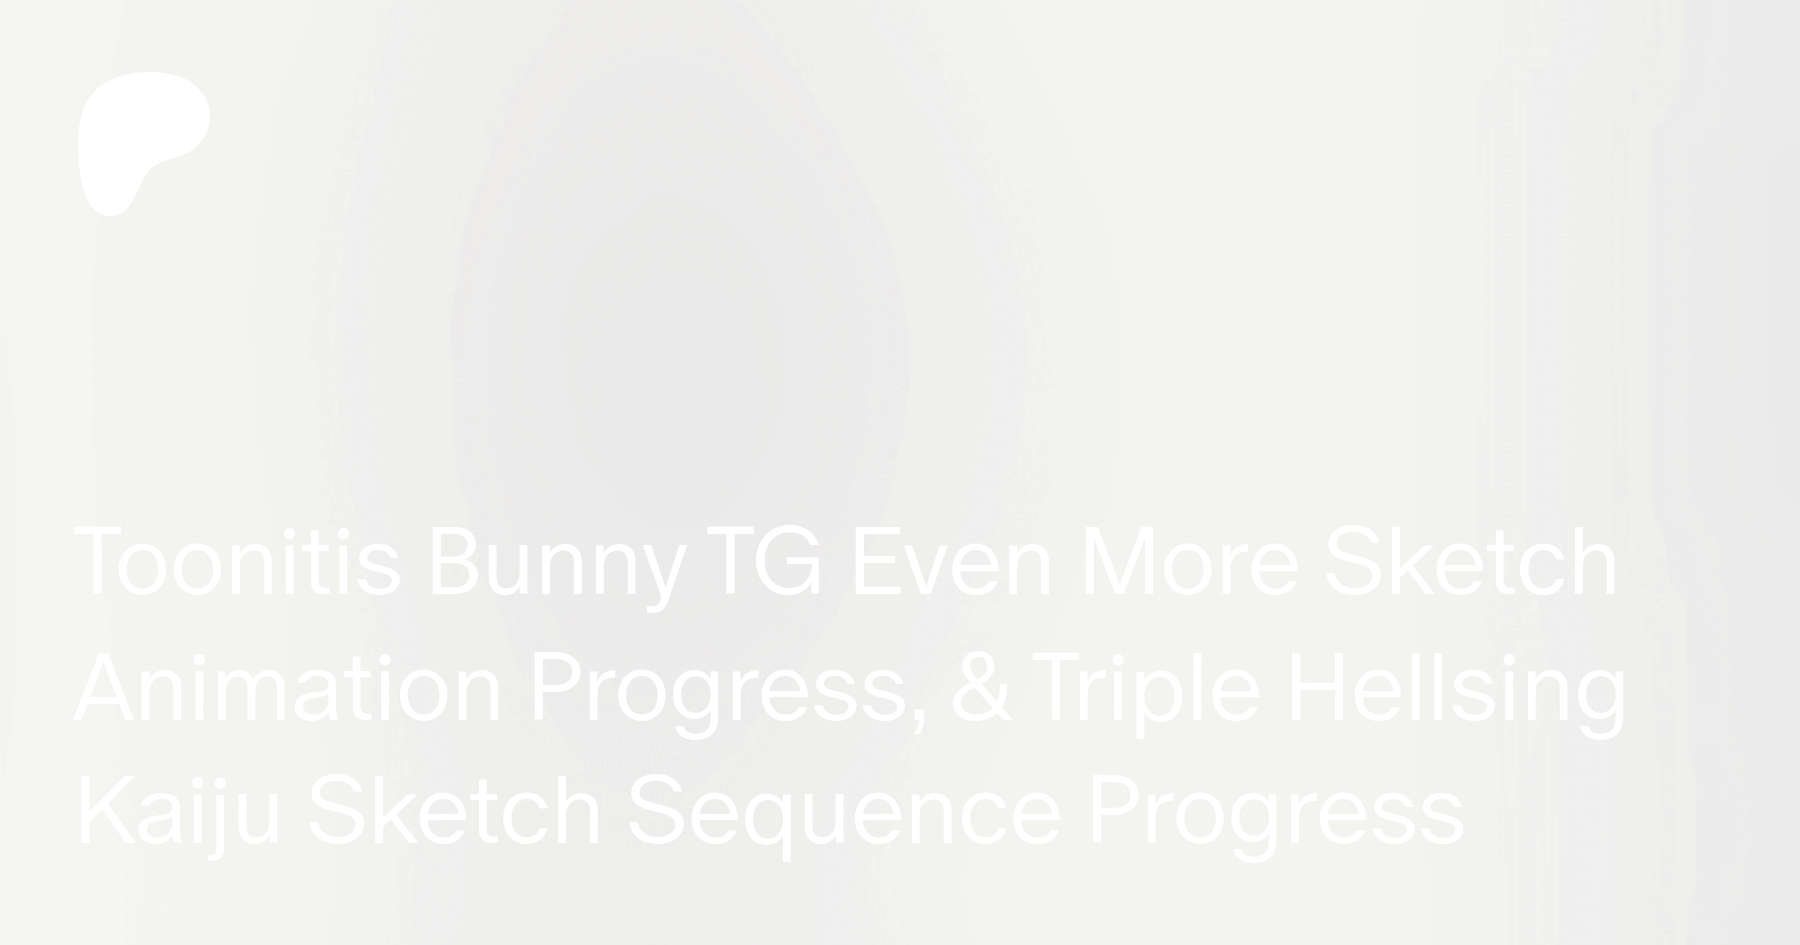 Toonitis Bunny TG Even More Sketch Animation Progress, & Triple Hellsing  Kaiju Sketch Sequence Progress | Patreon